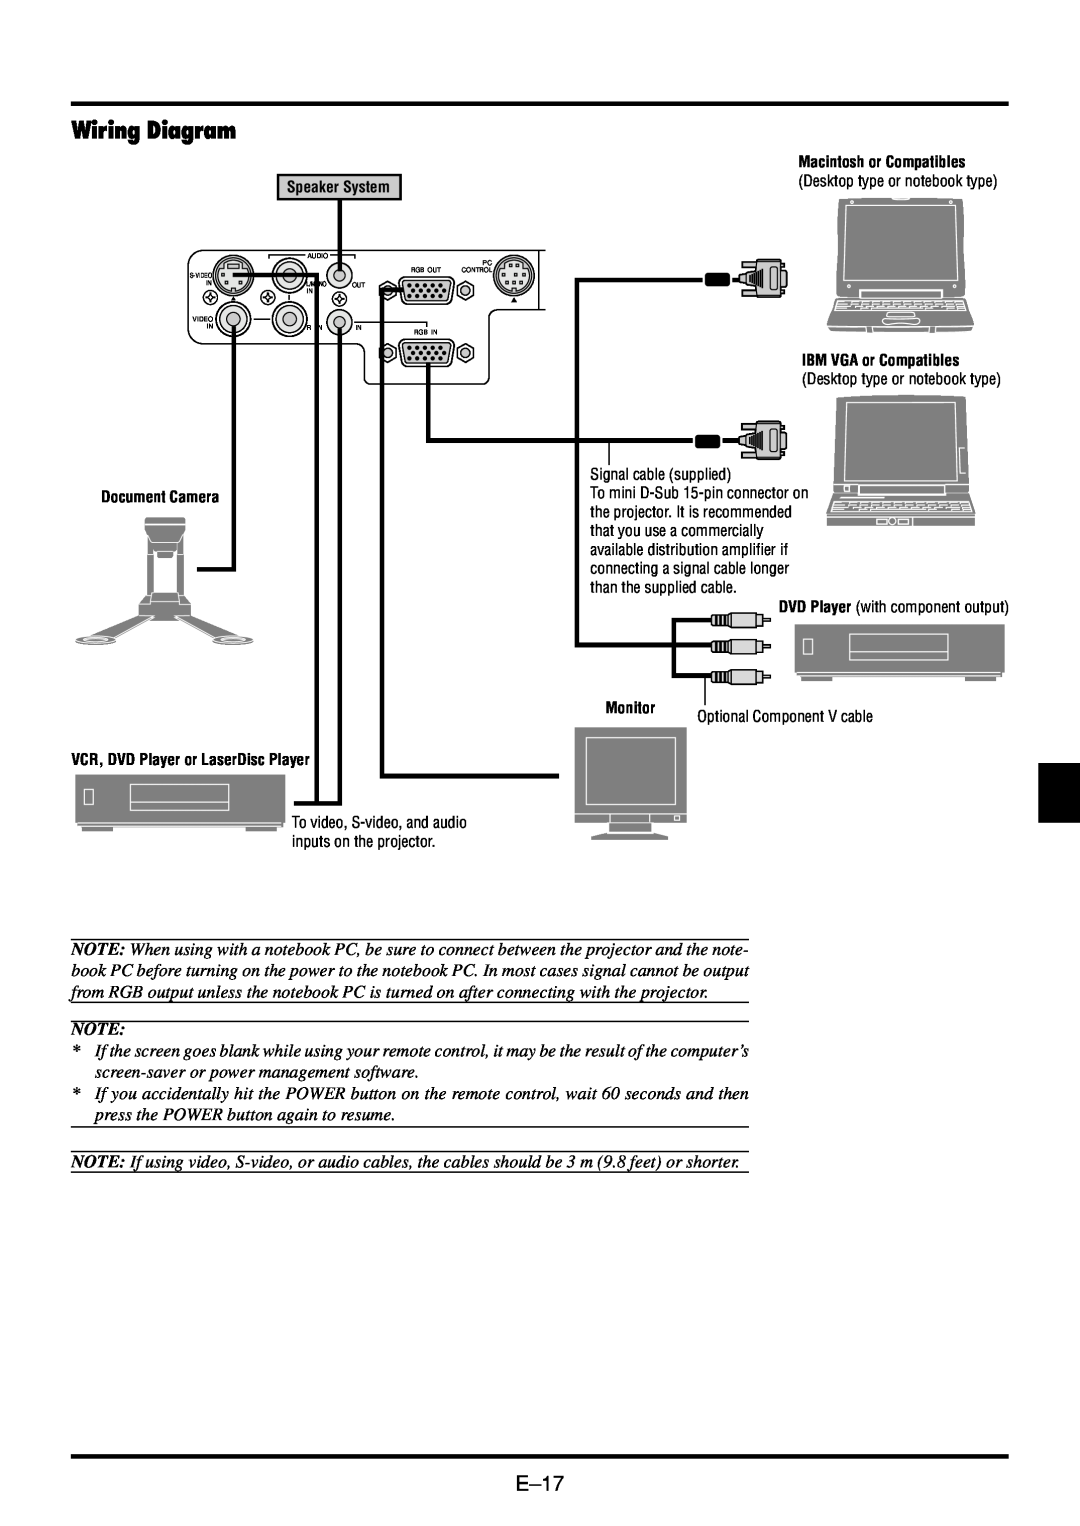 NEC VT45 user manual Wiring Diagram, E-17 